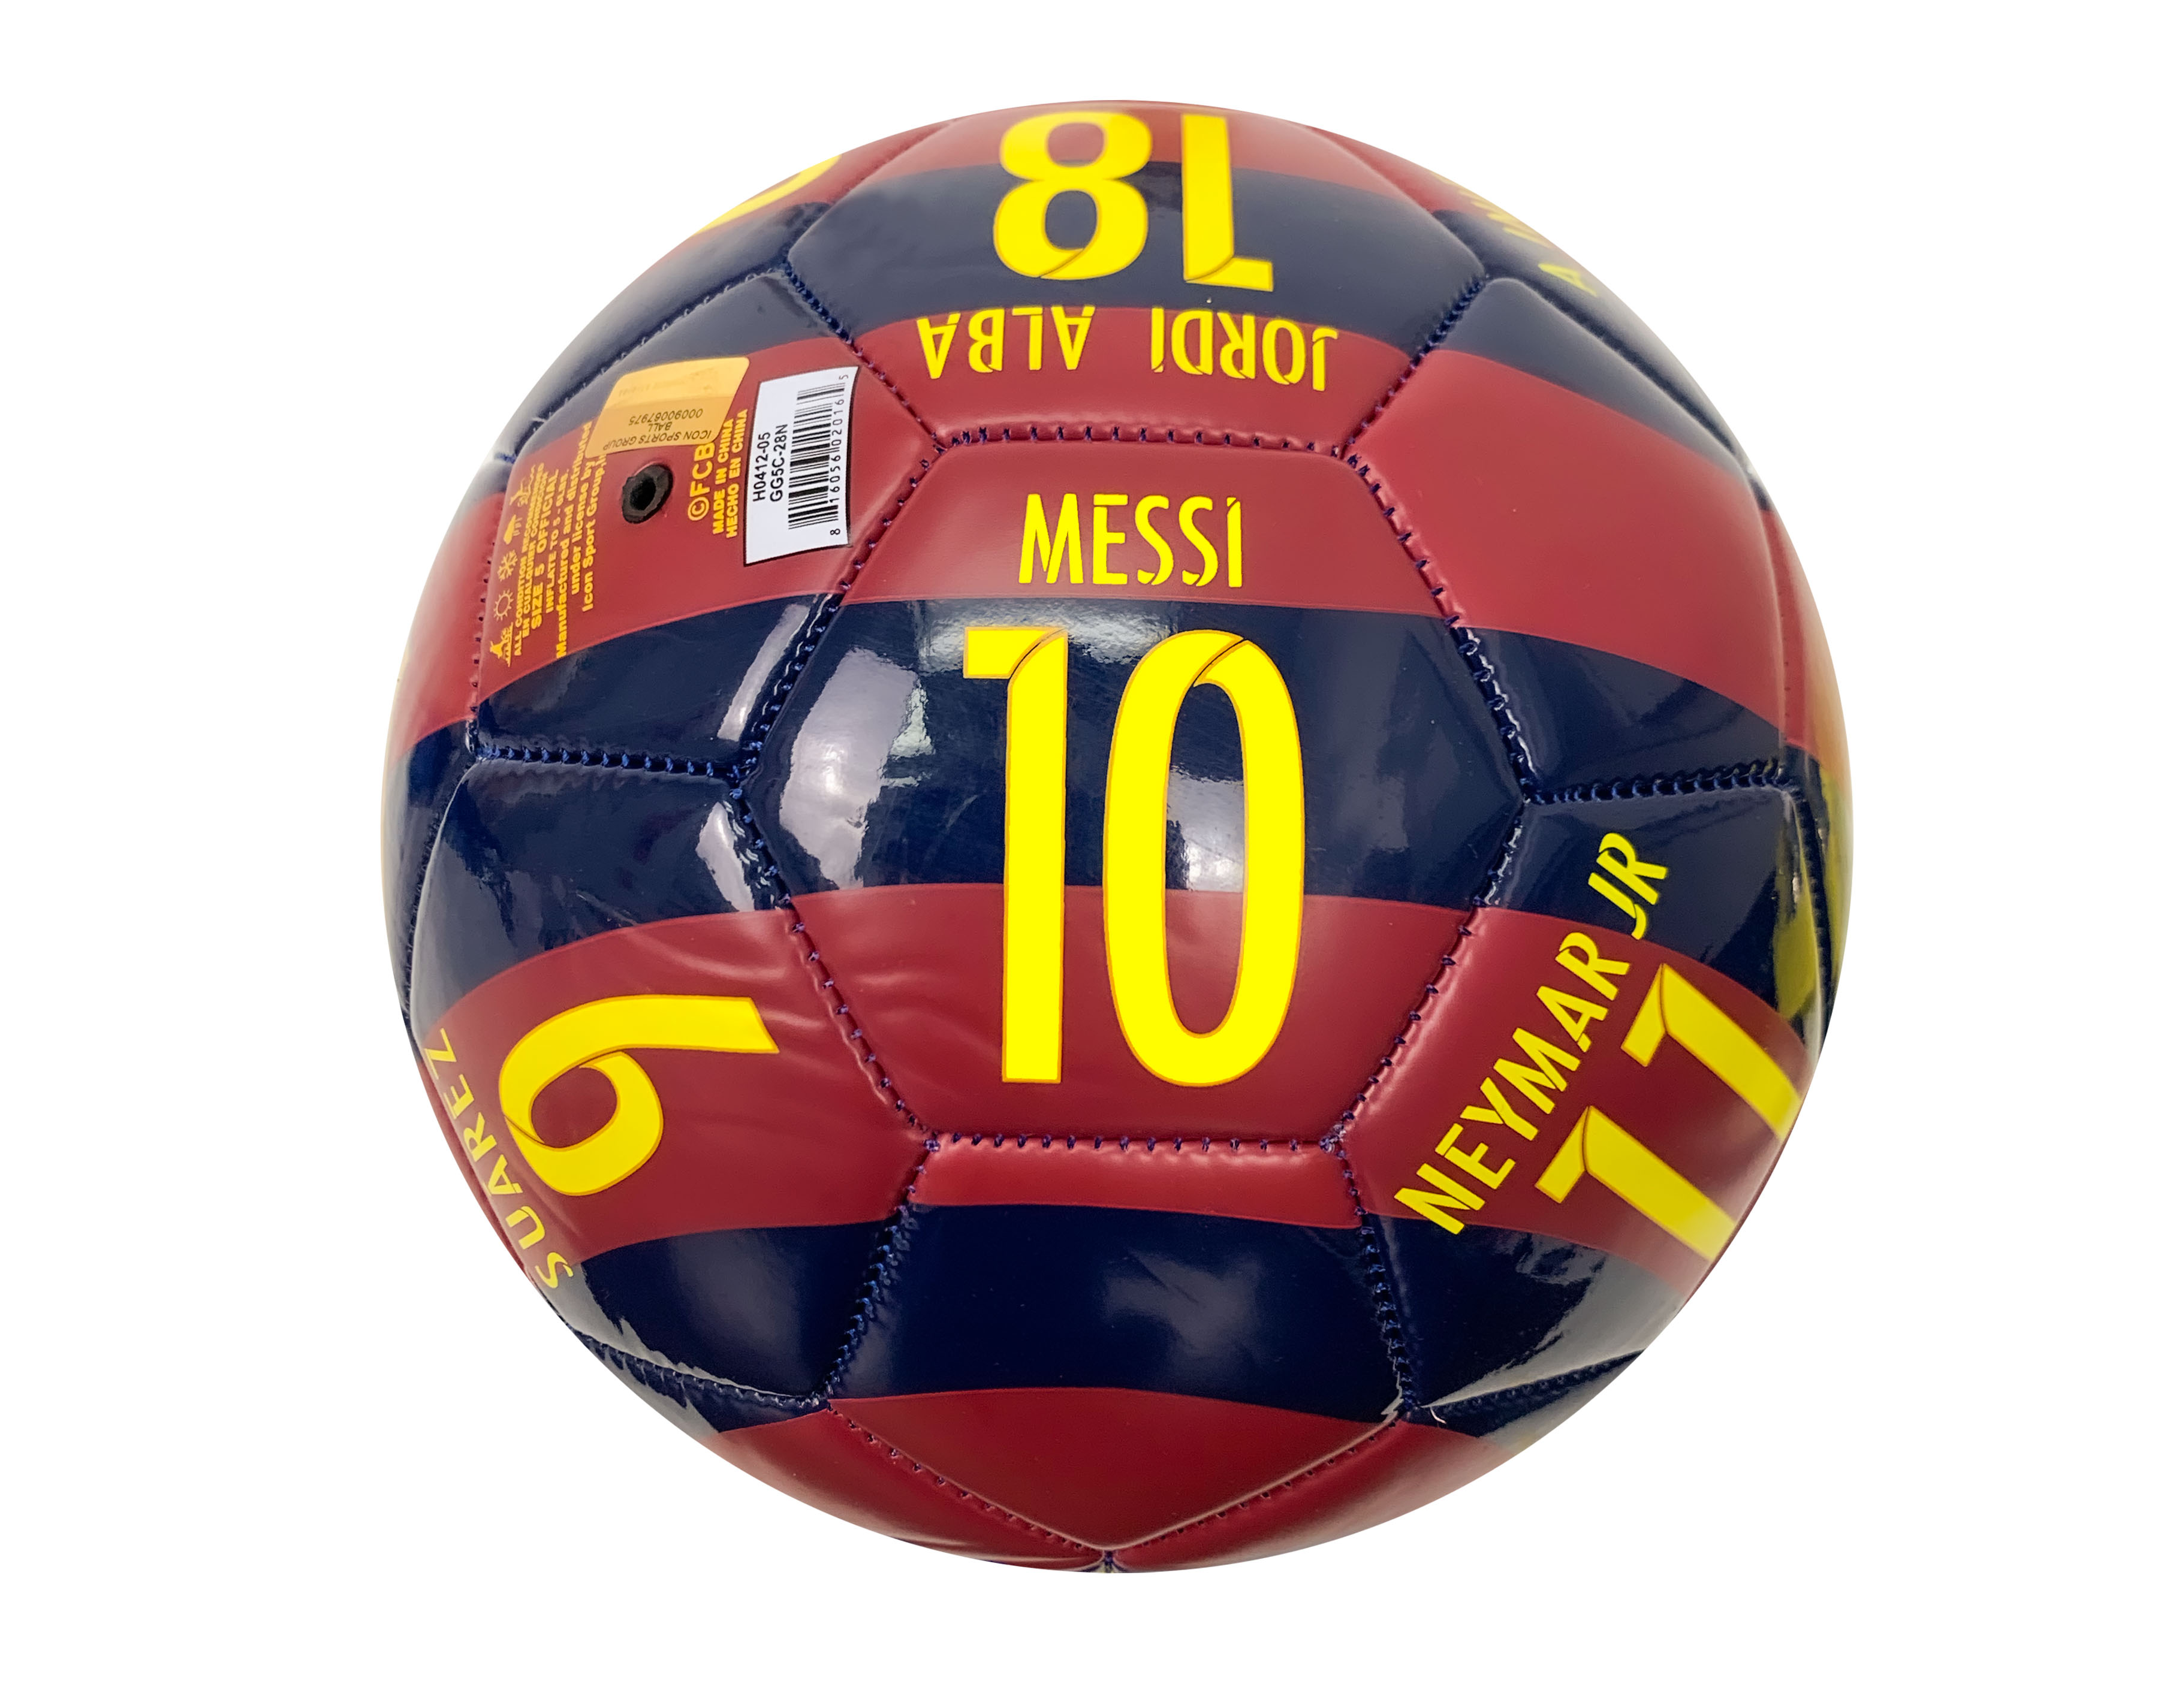 Barcelona Soccer ball (Size 5), FC Barcelona Players Ball Name & Number #5 - image 3 of 5